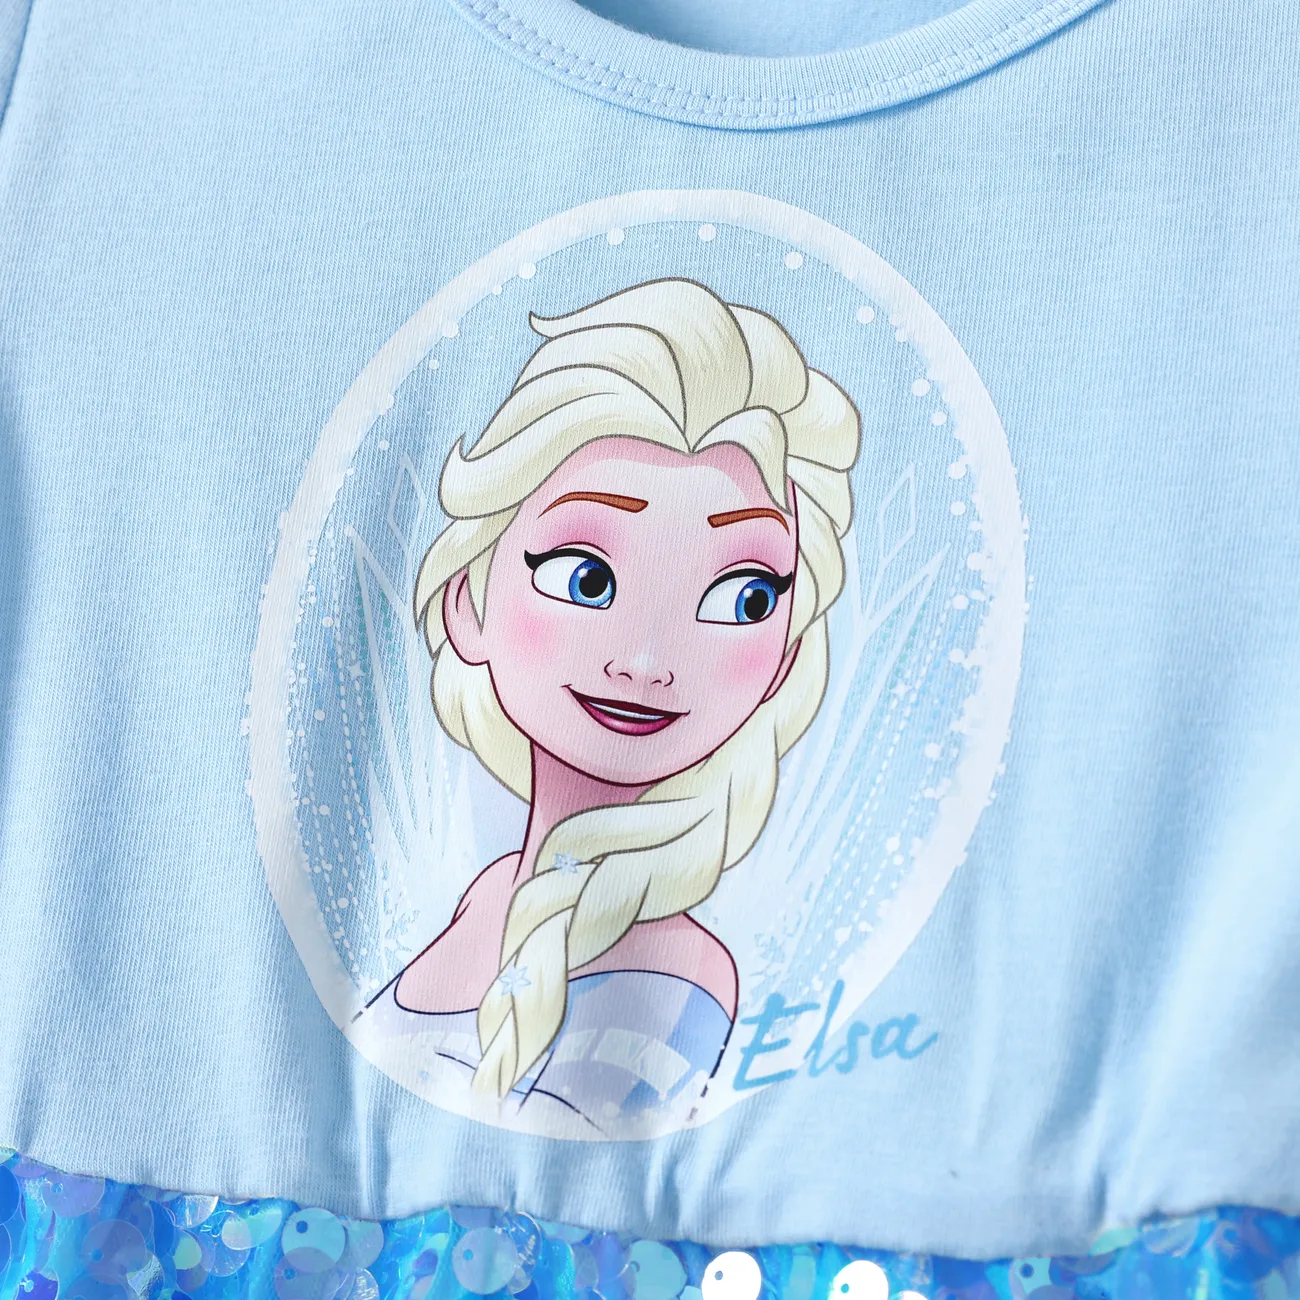 Disney Frozen Criança Menina Hipertátil/3D Infantil Vestidos Azul big image 1